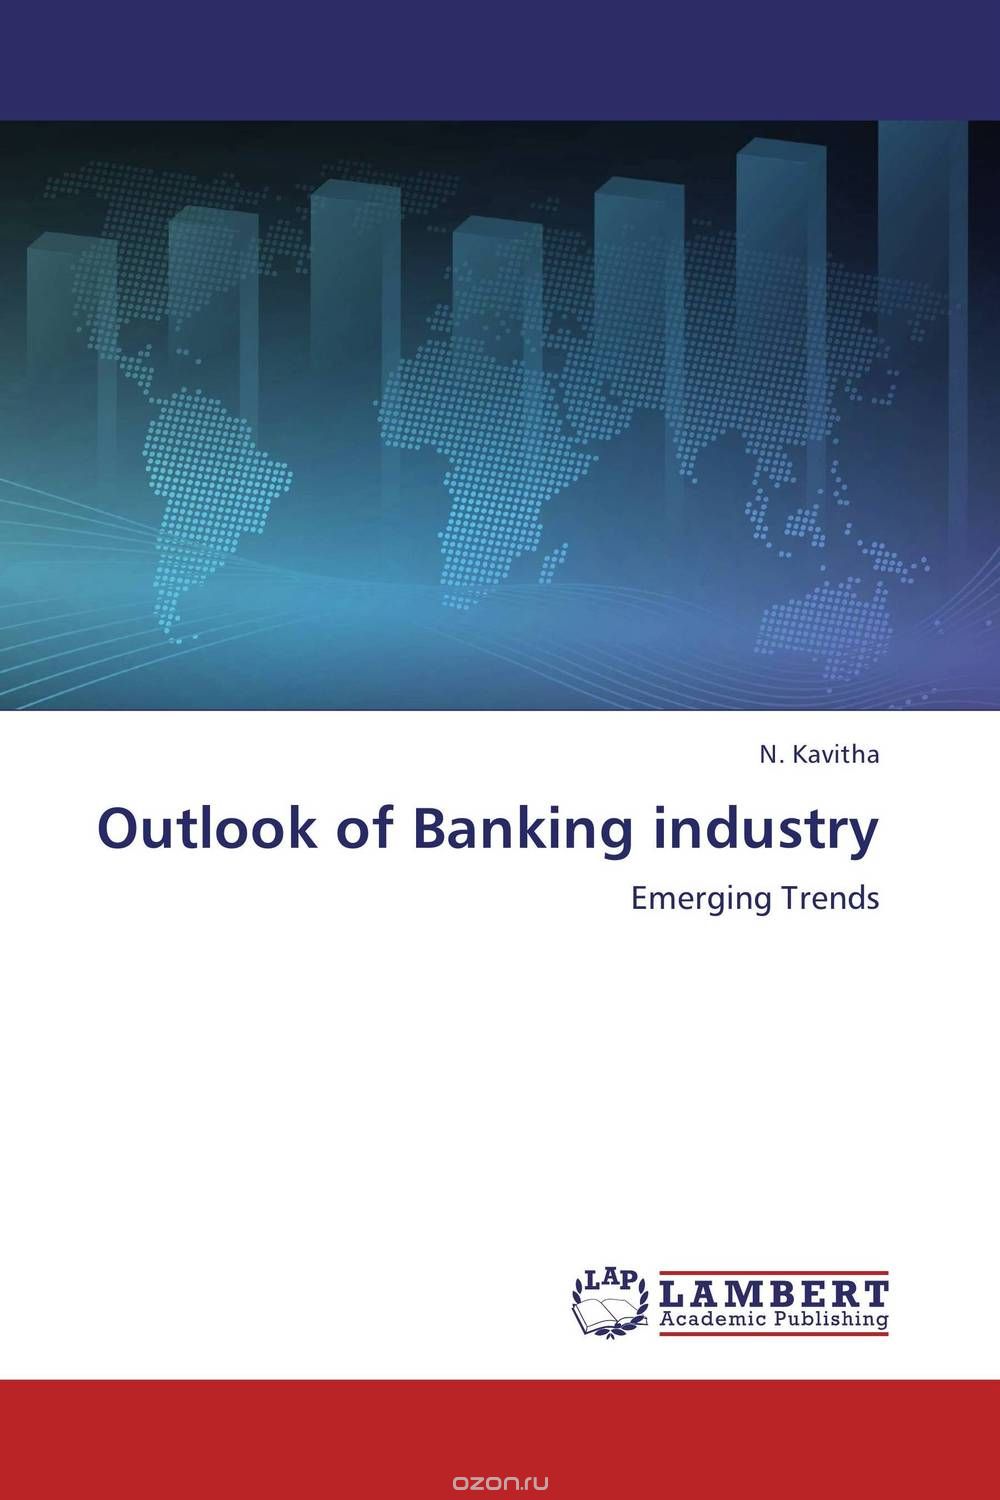 Скачать книгу "Outlook of Banking industry"